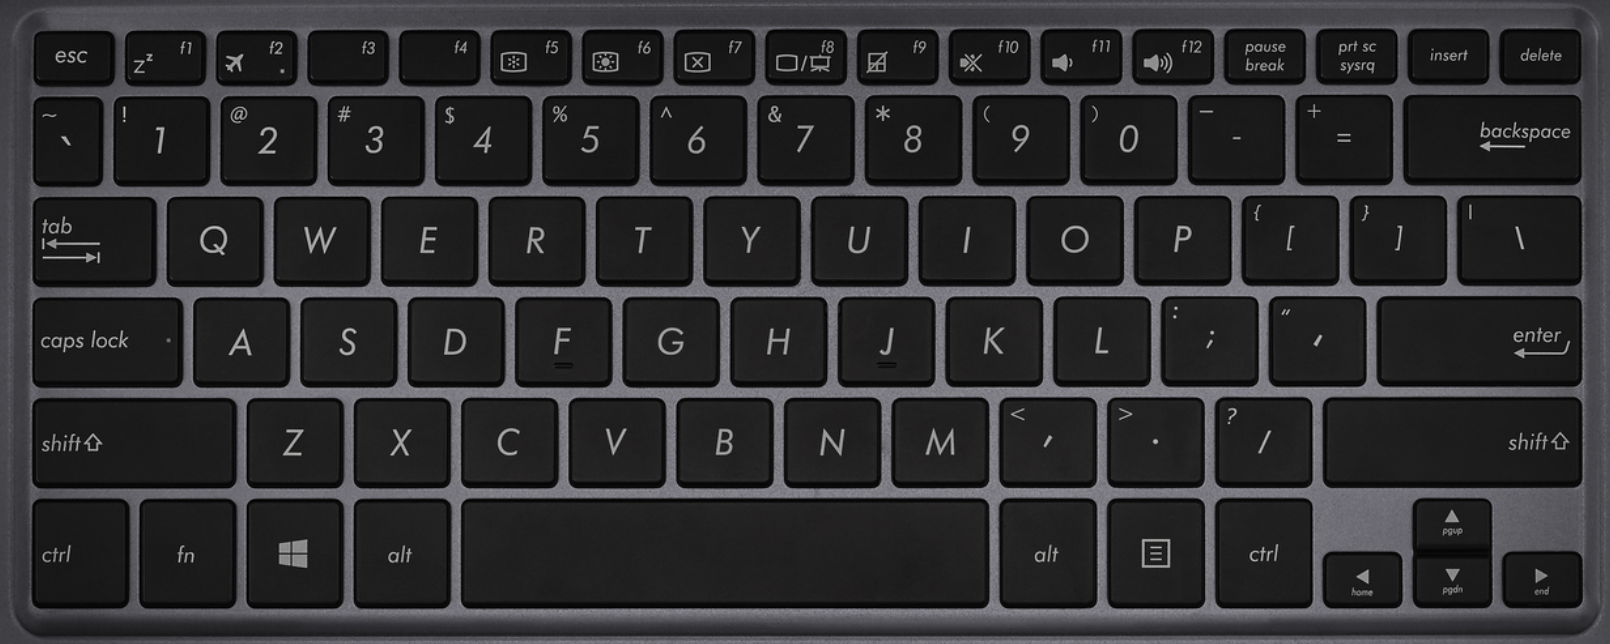 asus-zenbook-UX360CA-replacement-laptop-keyboard-key.jpg